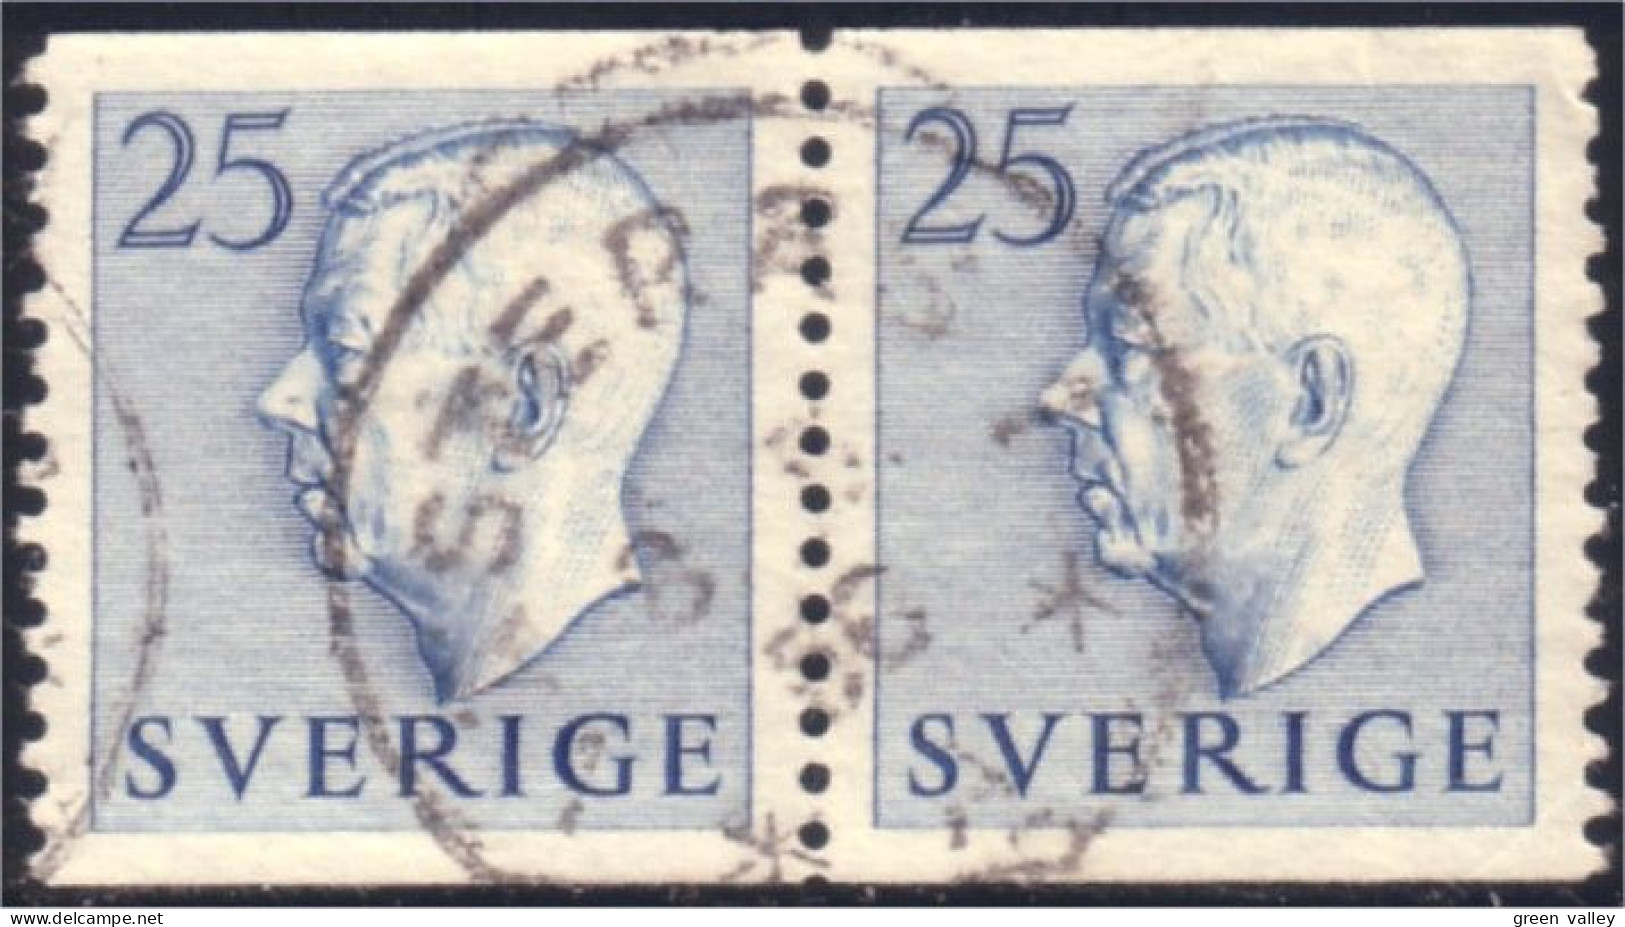 840 Sweden 1954 Gustav VI Adolph 25o Bleu Paire (SWE-369) - Oblitérés